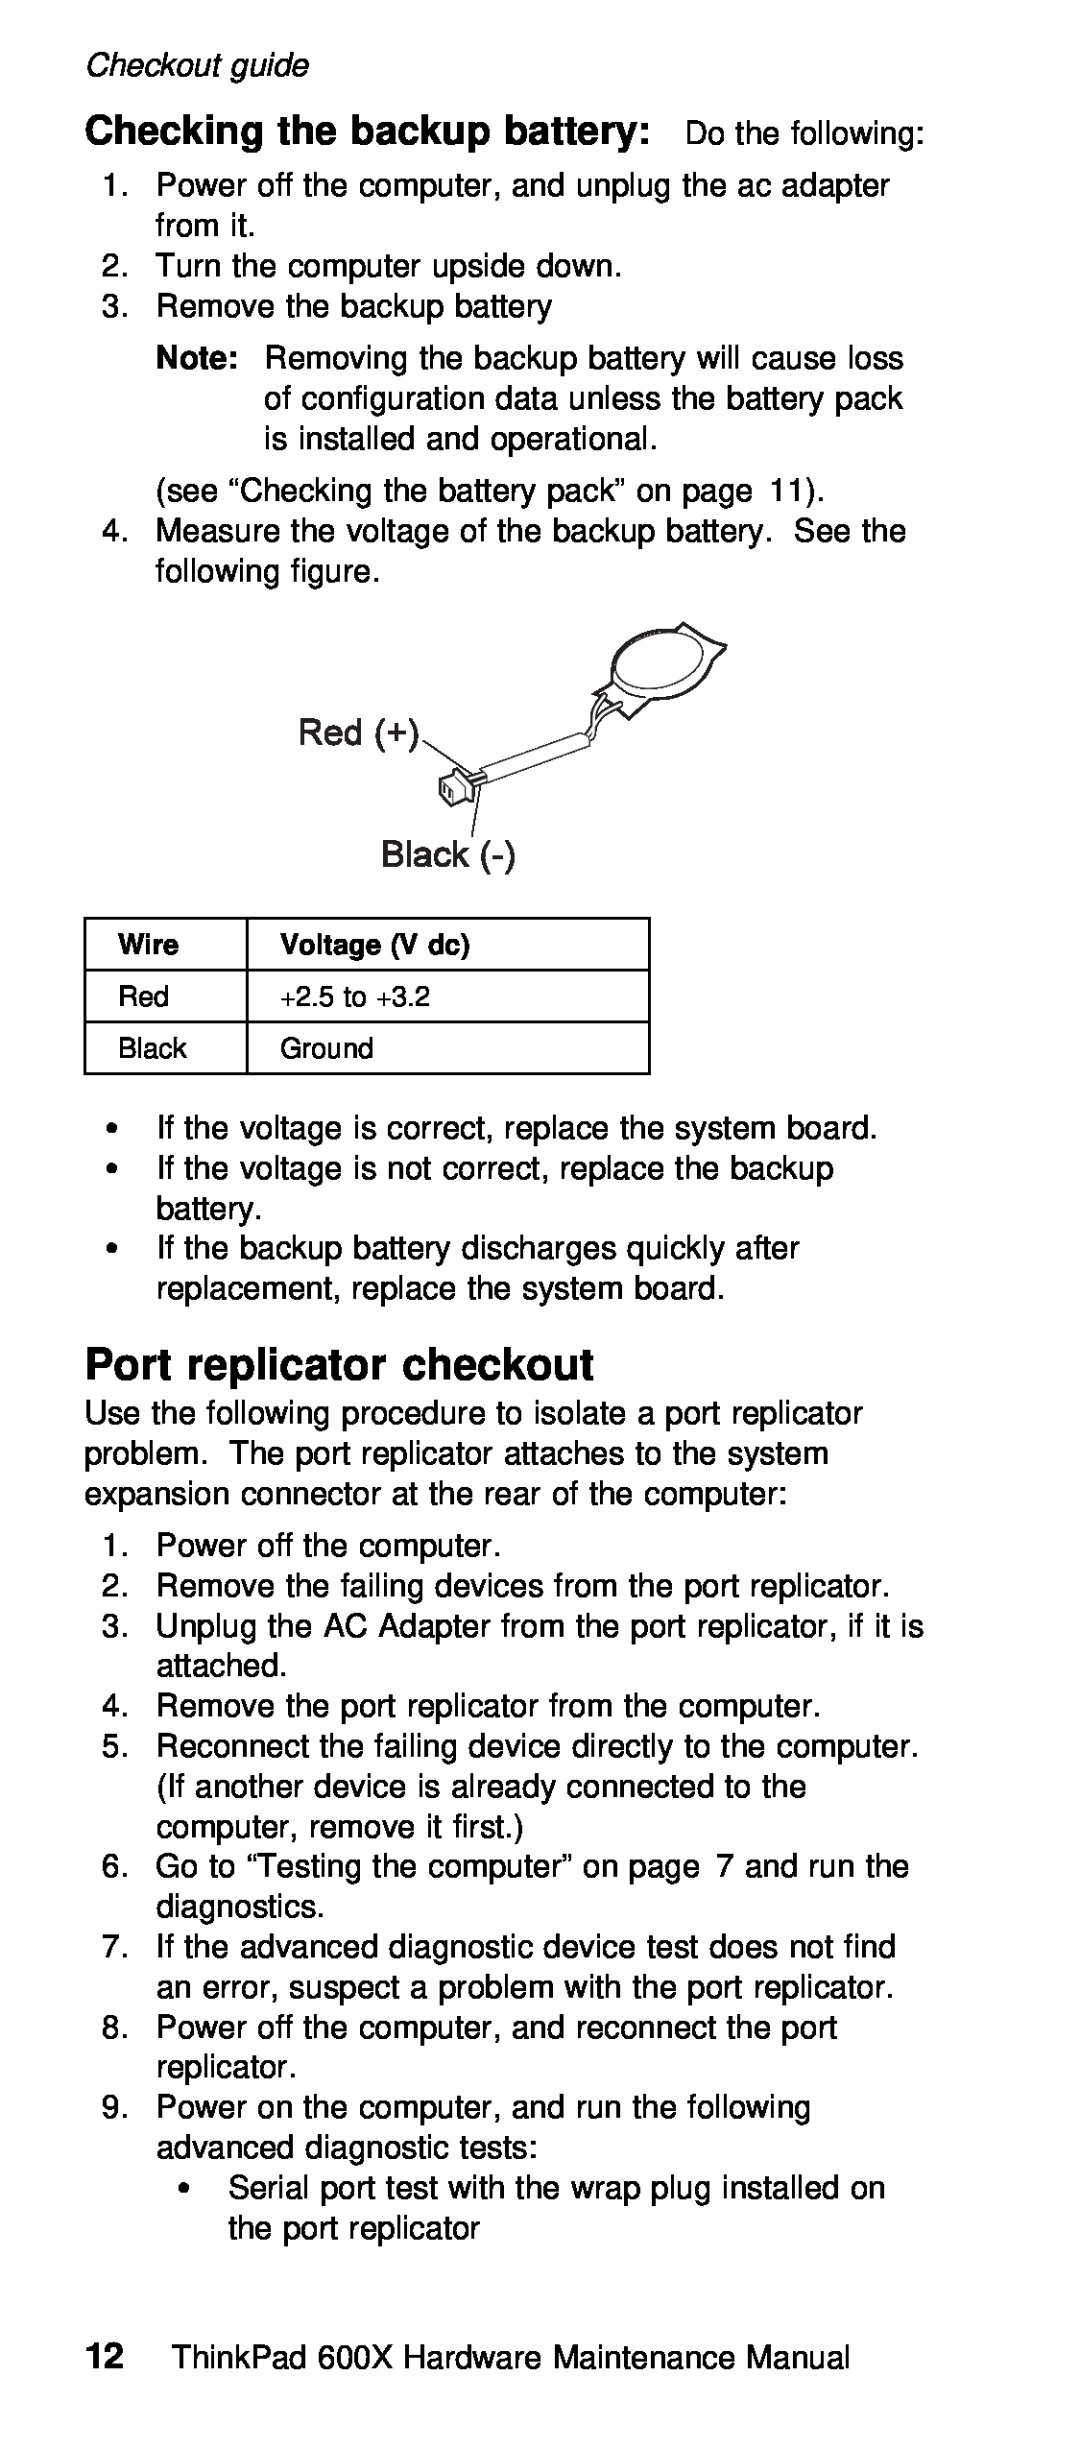 IBM 600X (MT 2646) manual Port replicator checkout, Checking the backup battery 